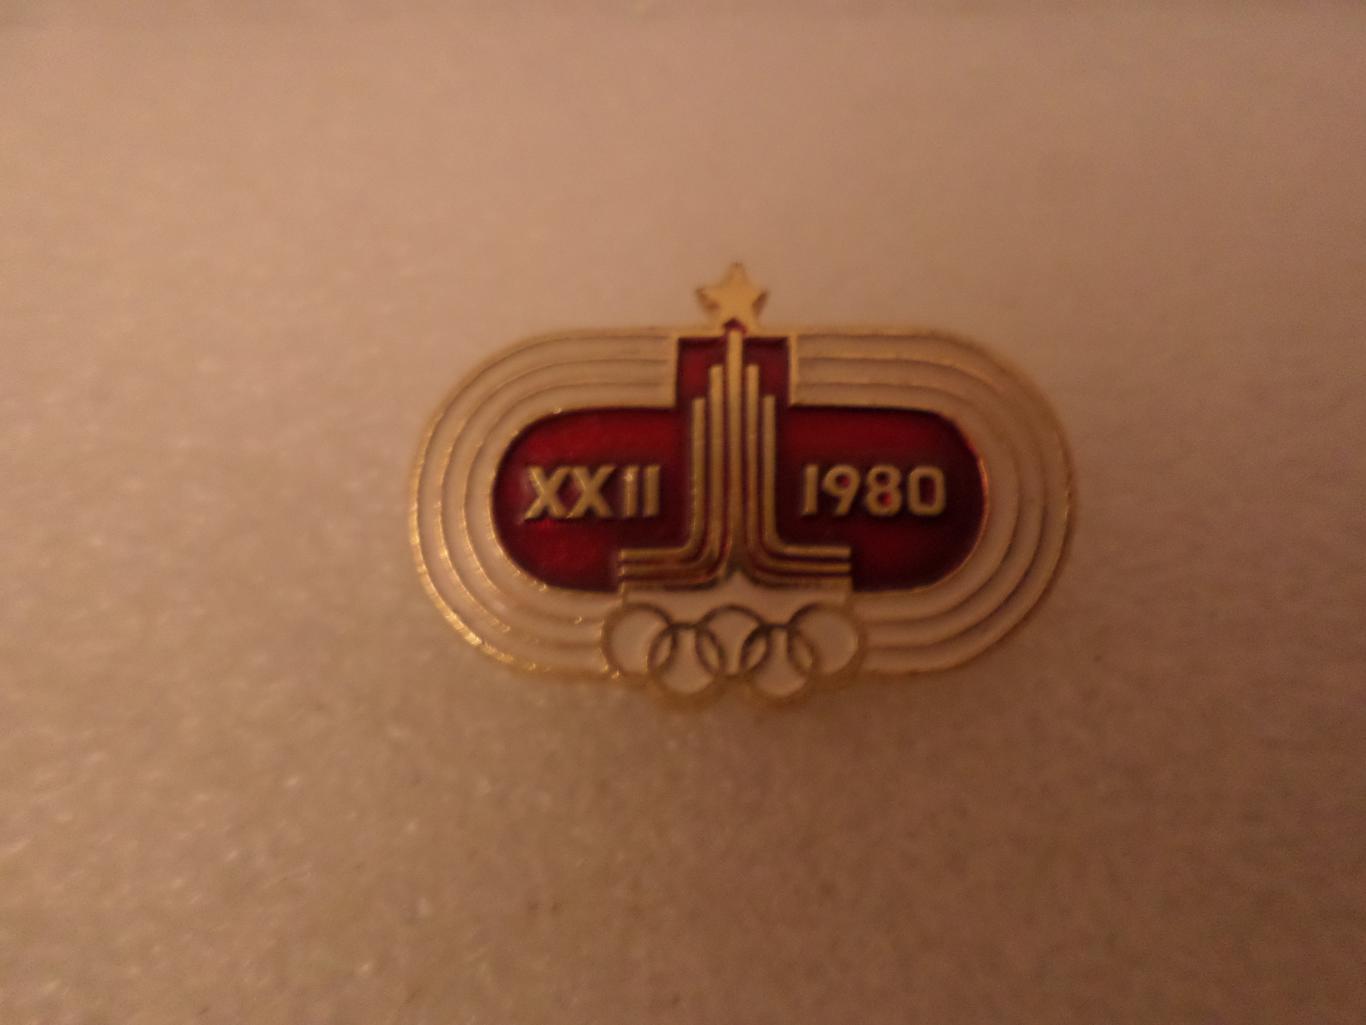 значок Олимпиада-80 Москва 1980 г эмблема